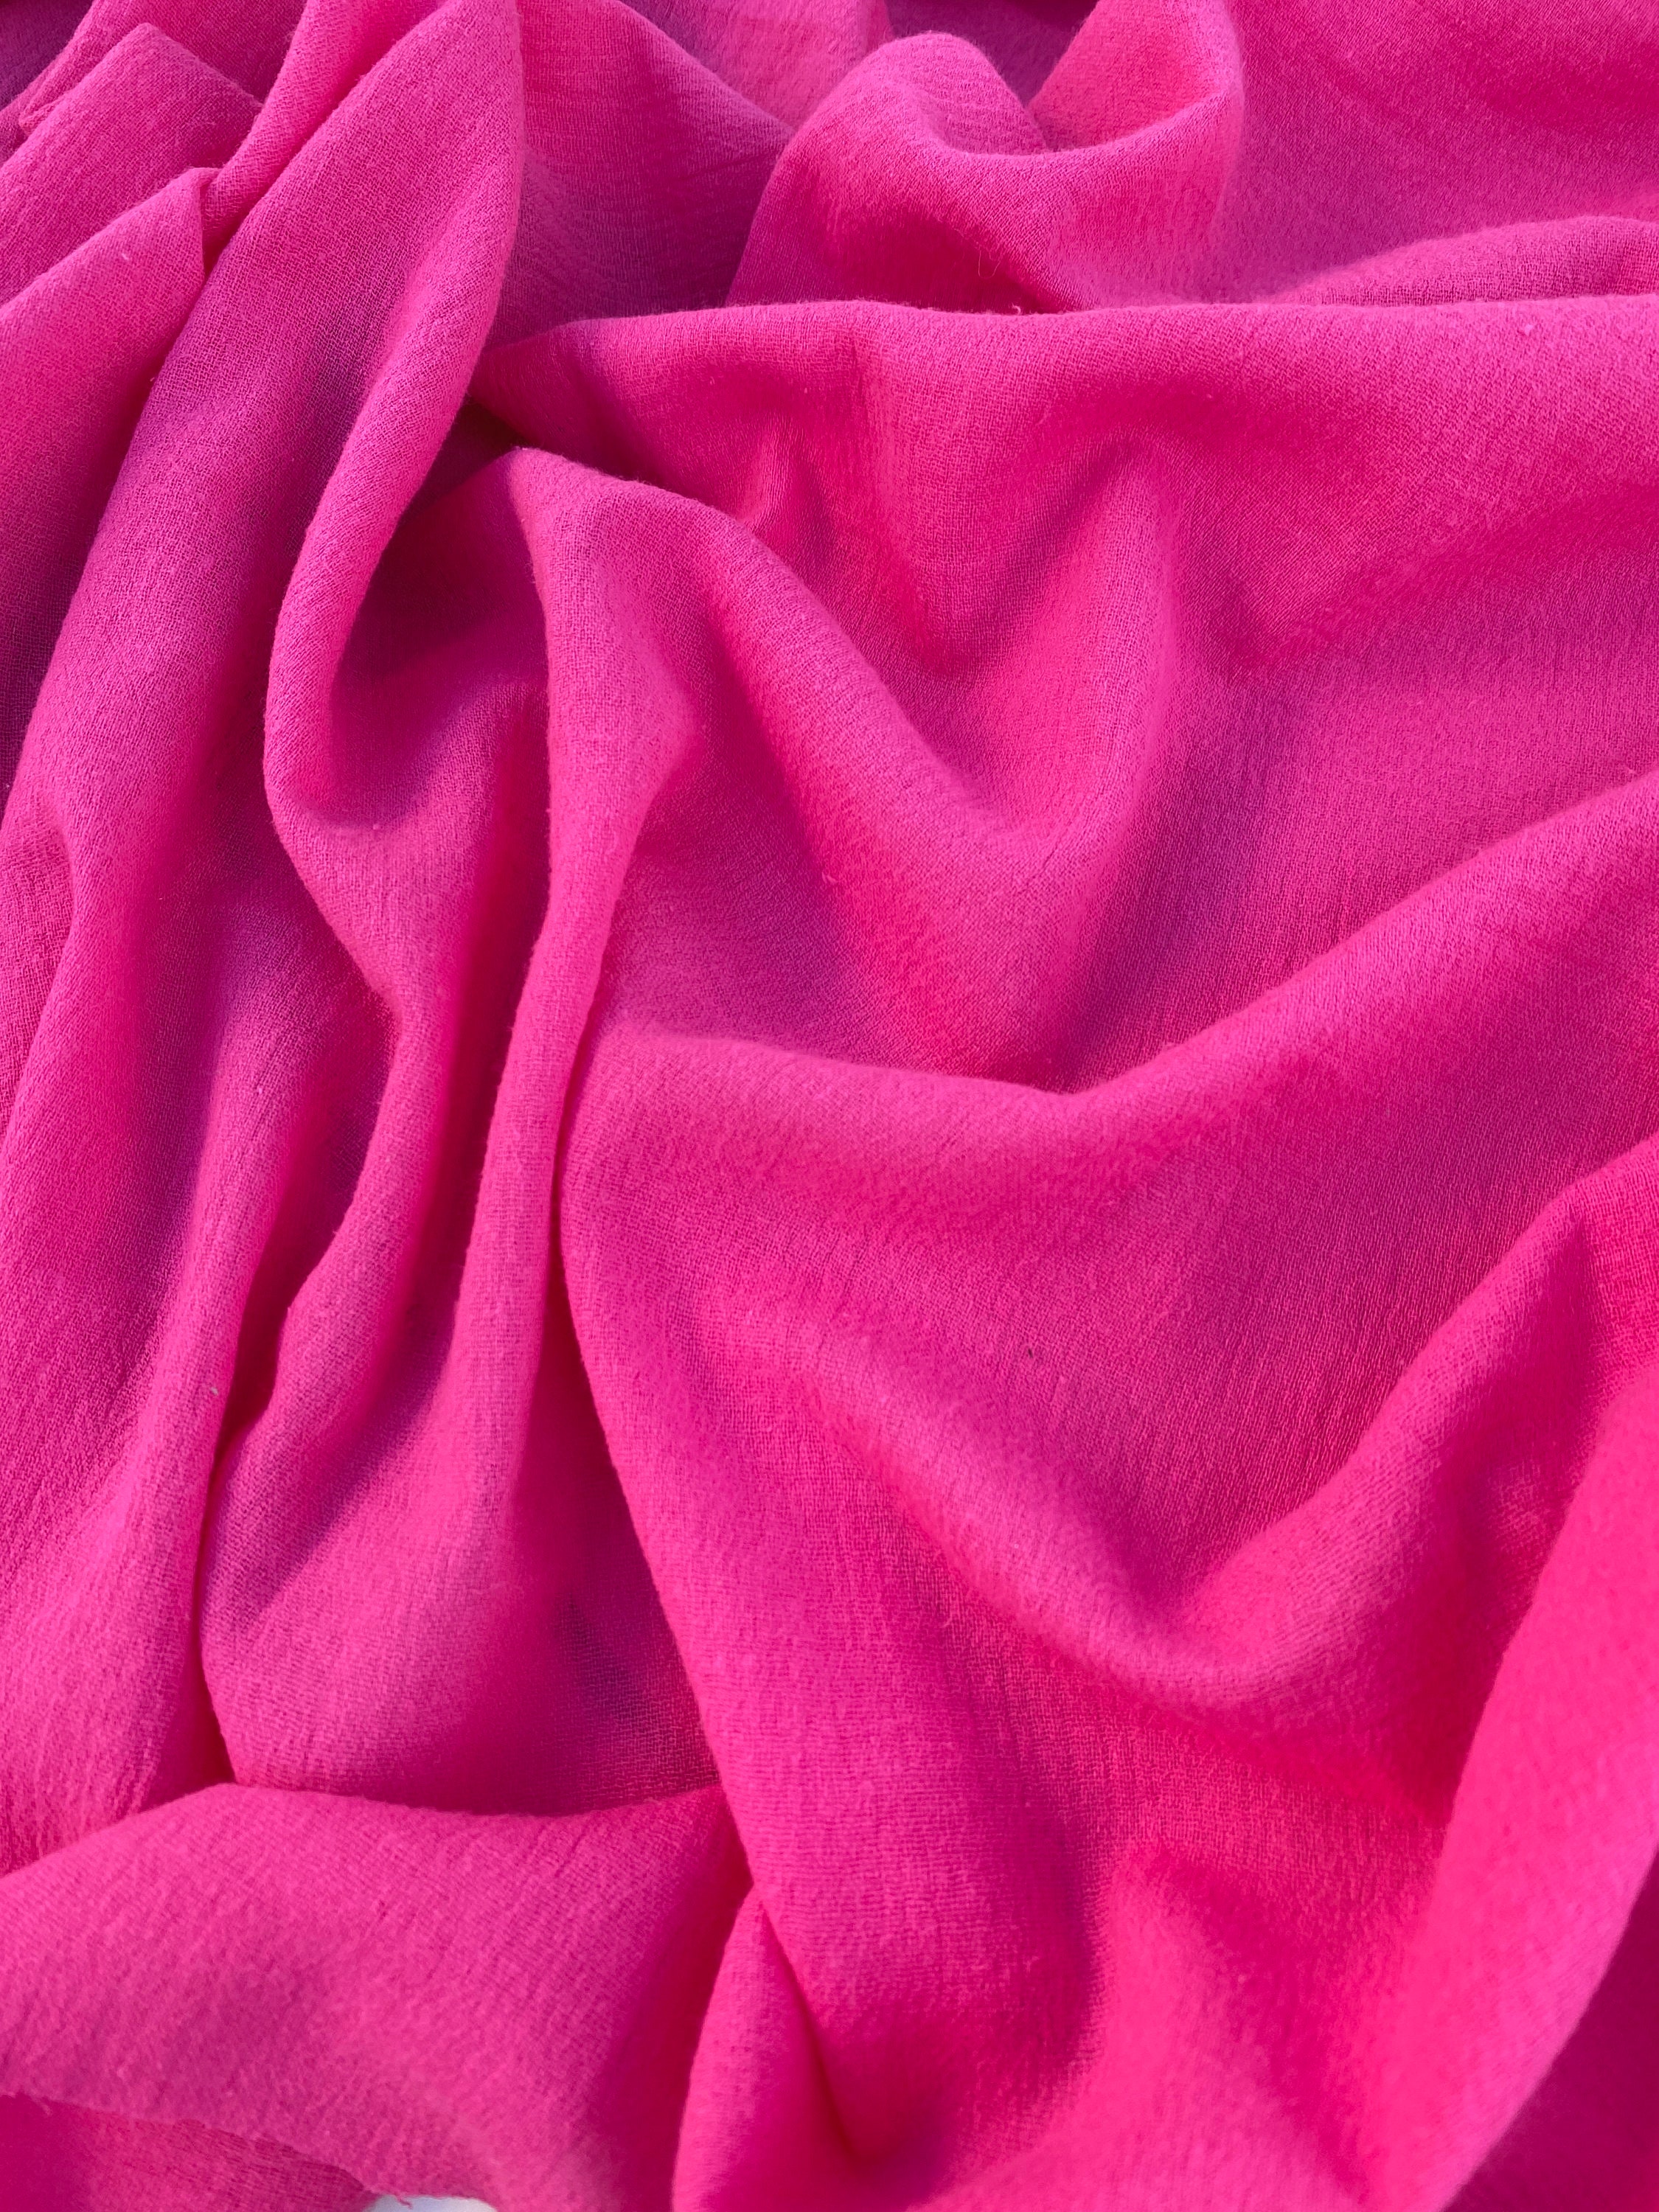 Rainbow Print Fabric, Baby Muslin Fabric, Gauze Fabric, Watercolor Fabric,  Pastel Cotton Fabric, Natural Fabric by Yard, Baby Crib Fabric 